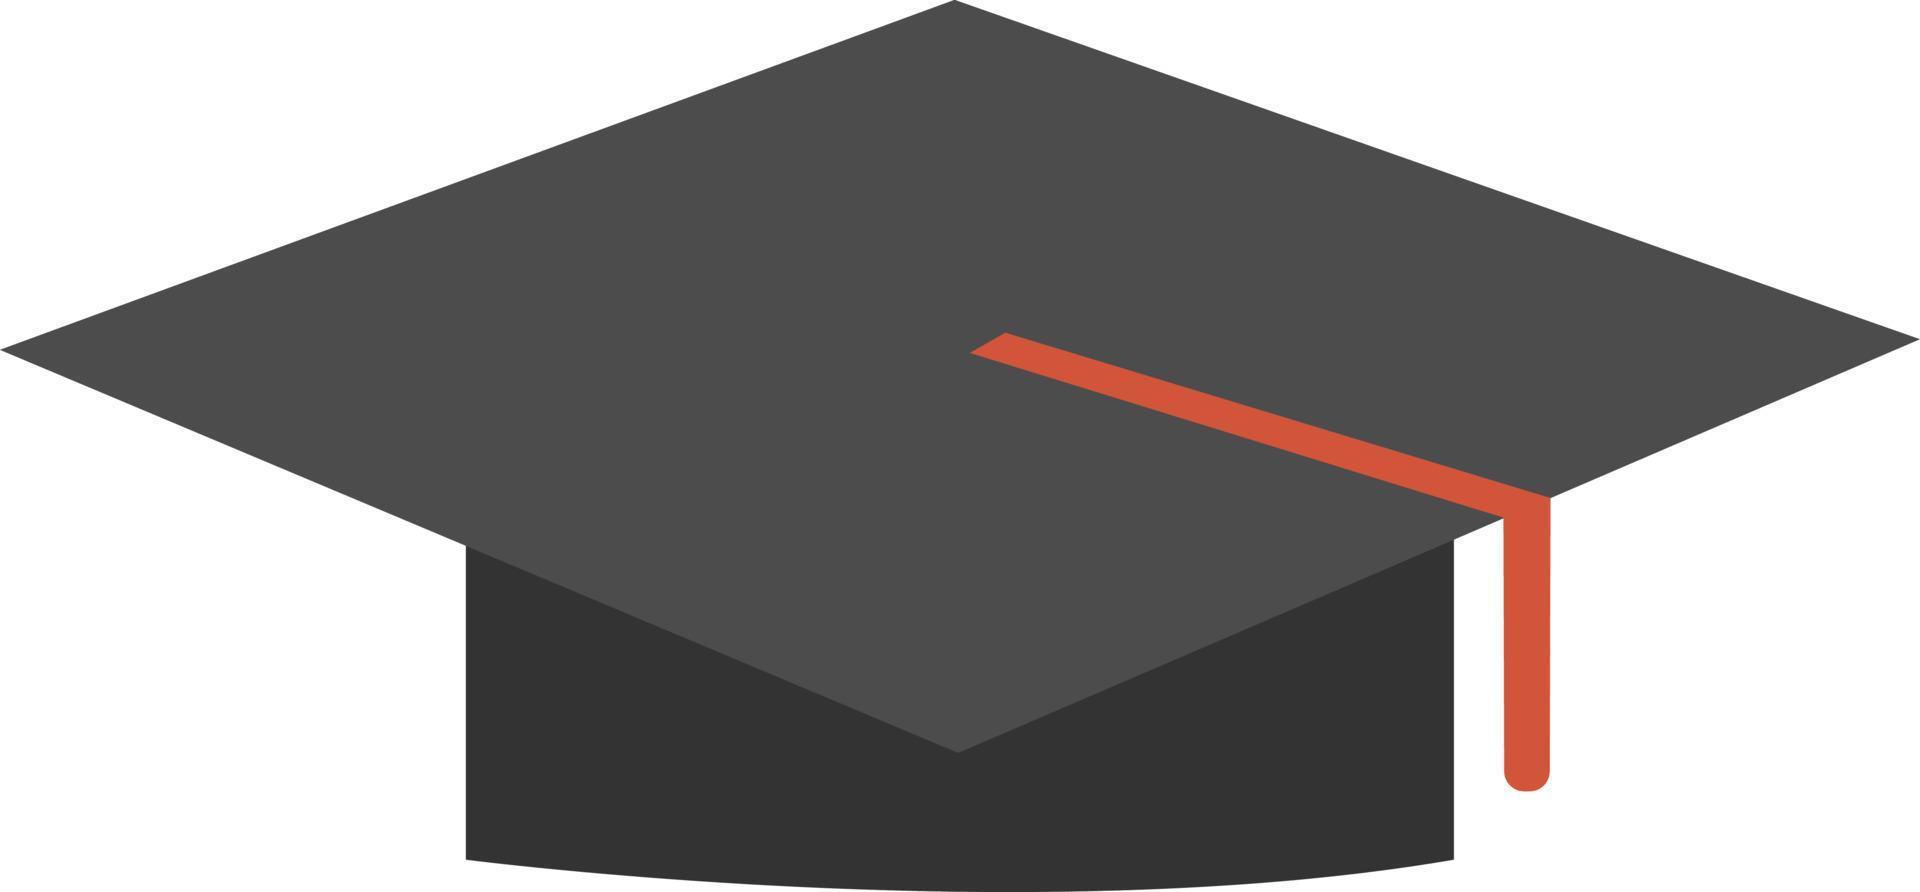 Graduate hat, illustration, vector on white background.